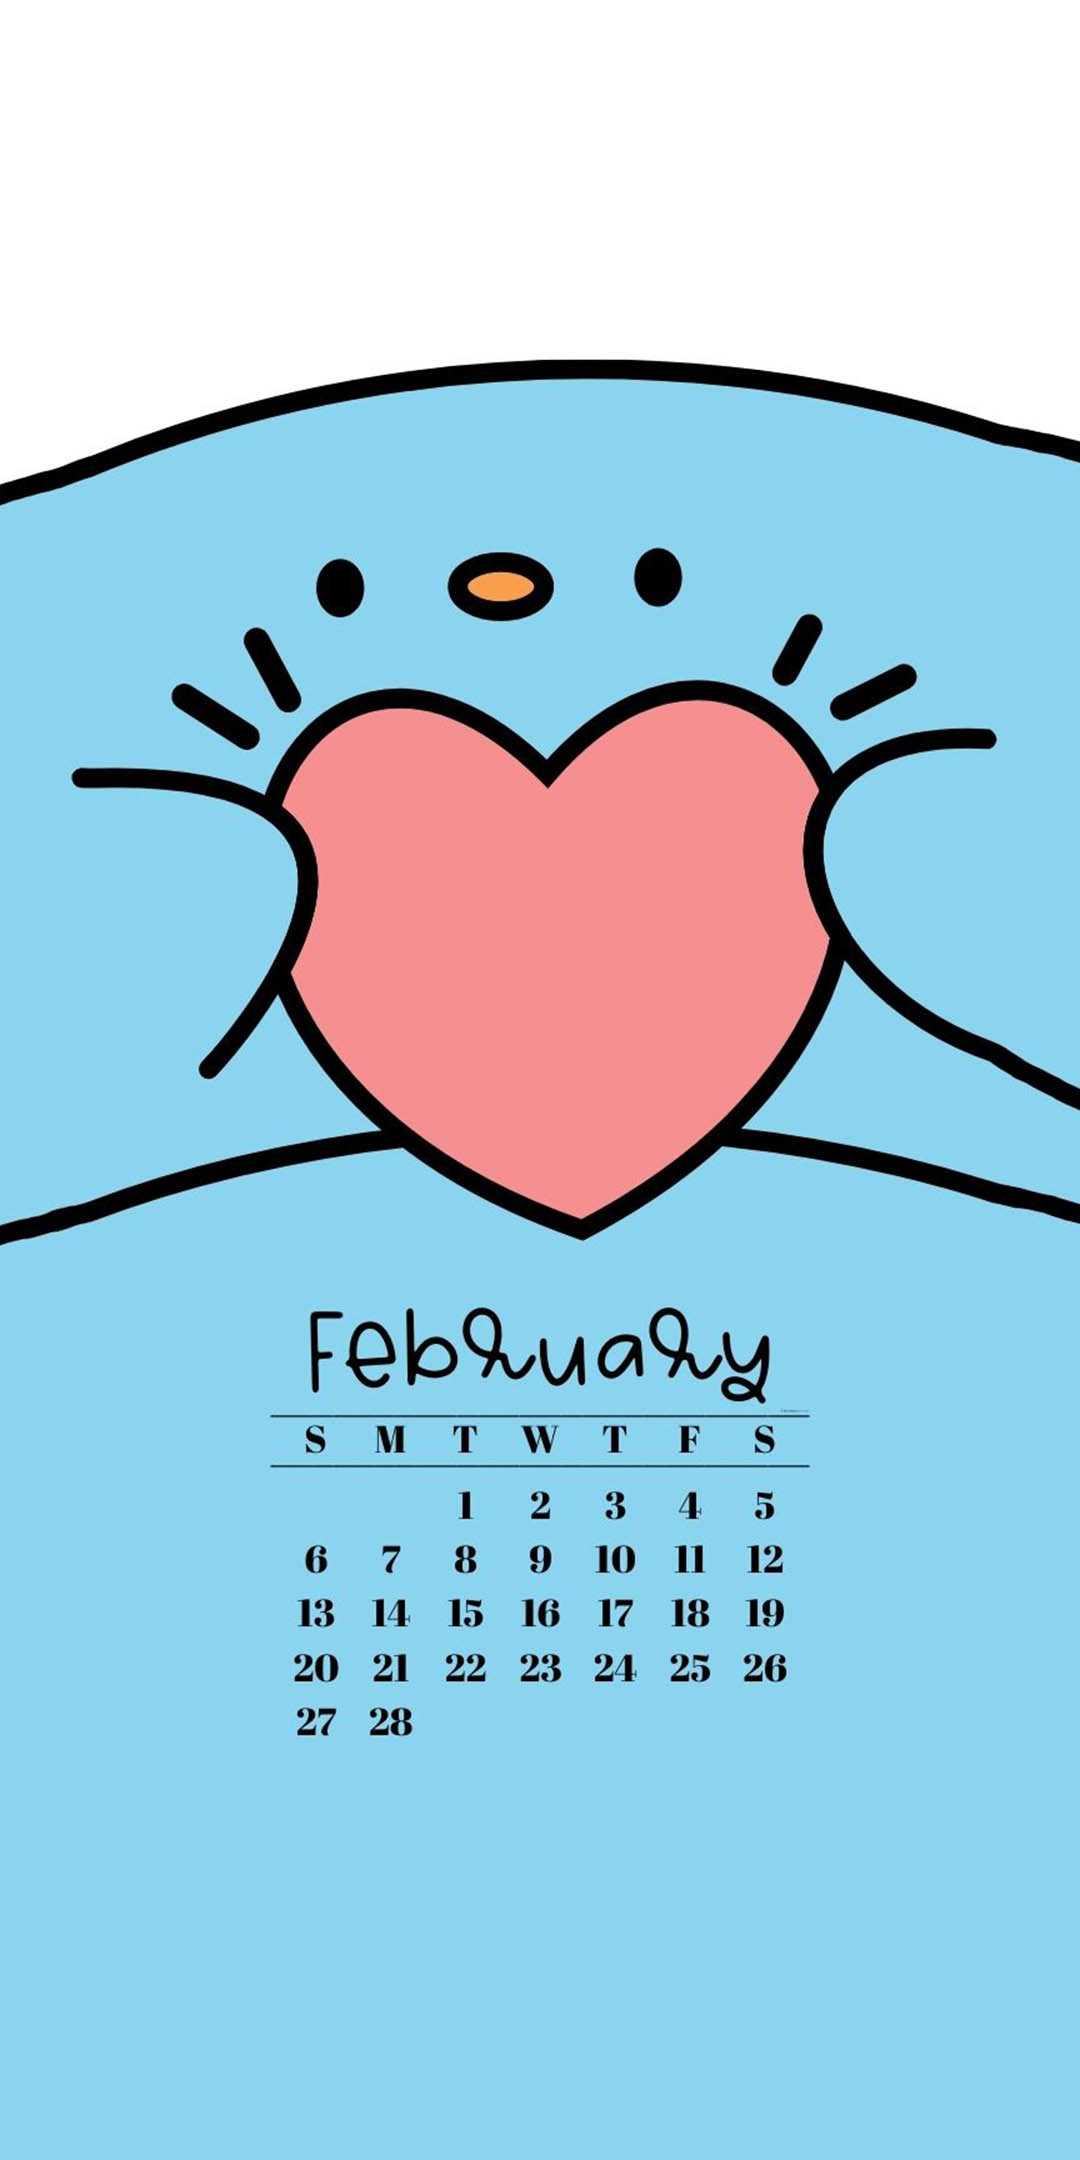 February 2022 Calendar Wallpaper 1